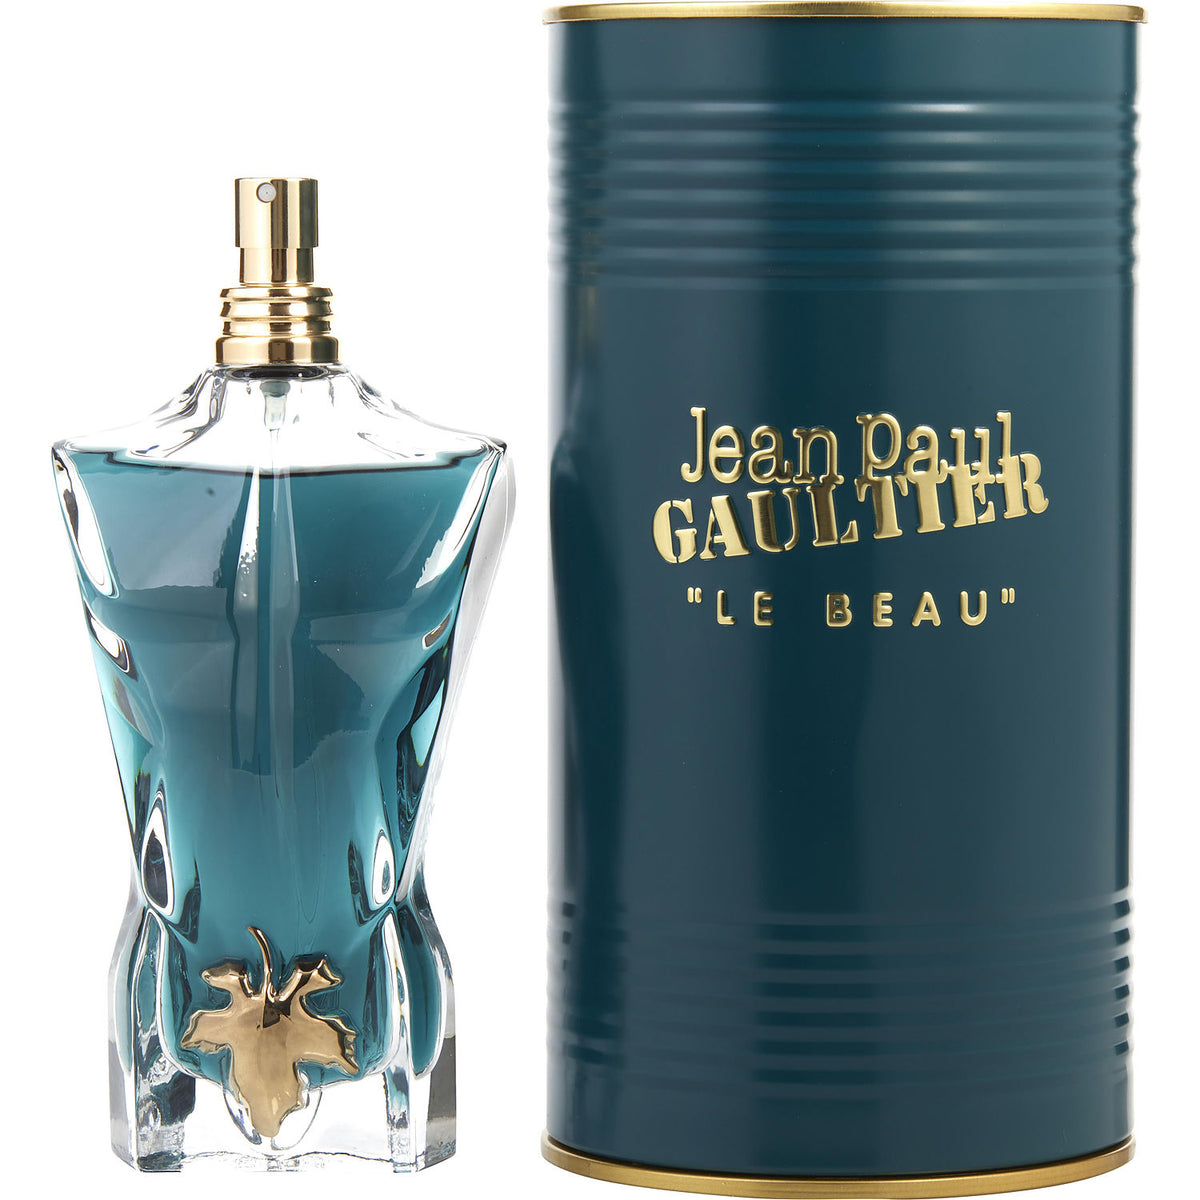 Le Beau Le Parfum By Jean Paul Gaultier Perfume sample & Subscription